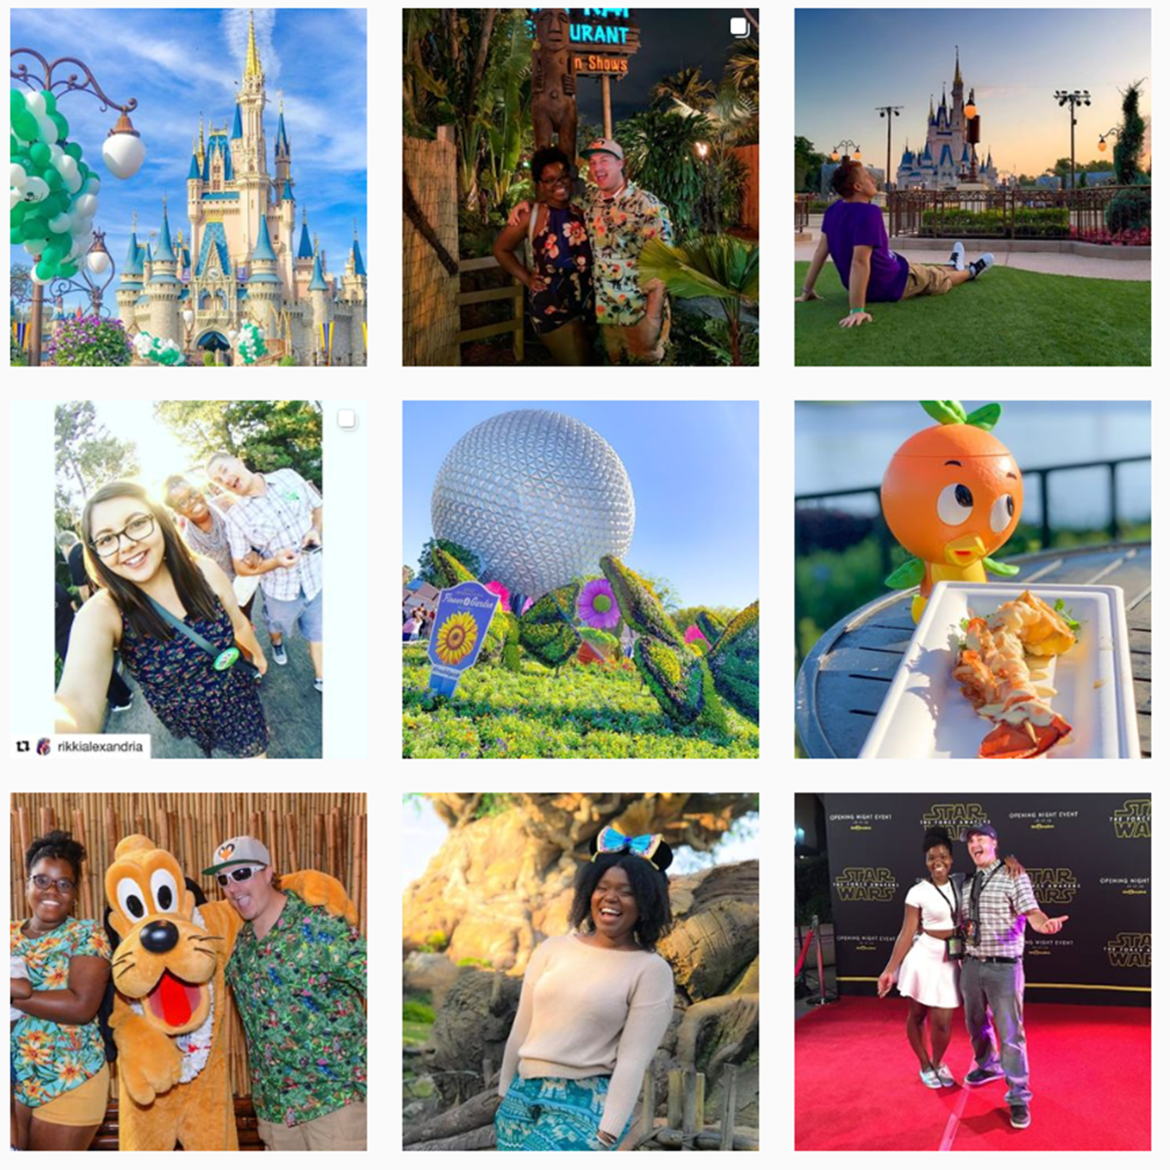 The Disney Fox on Instagram